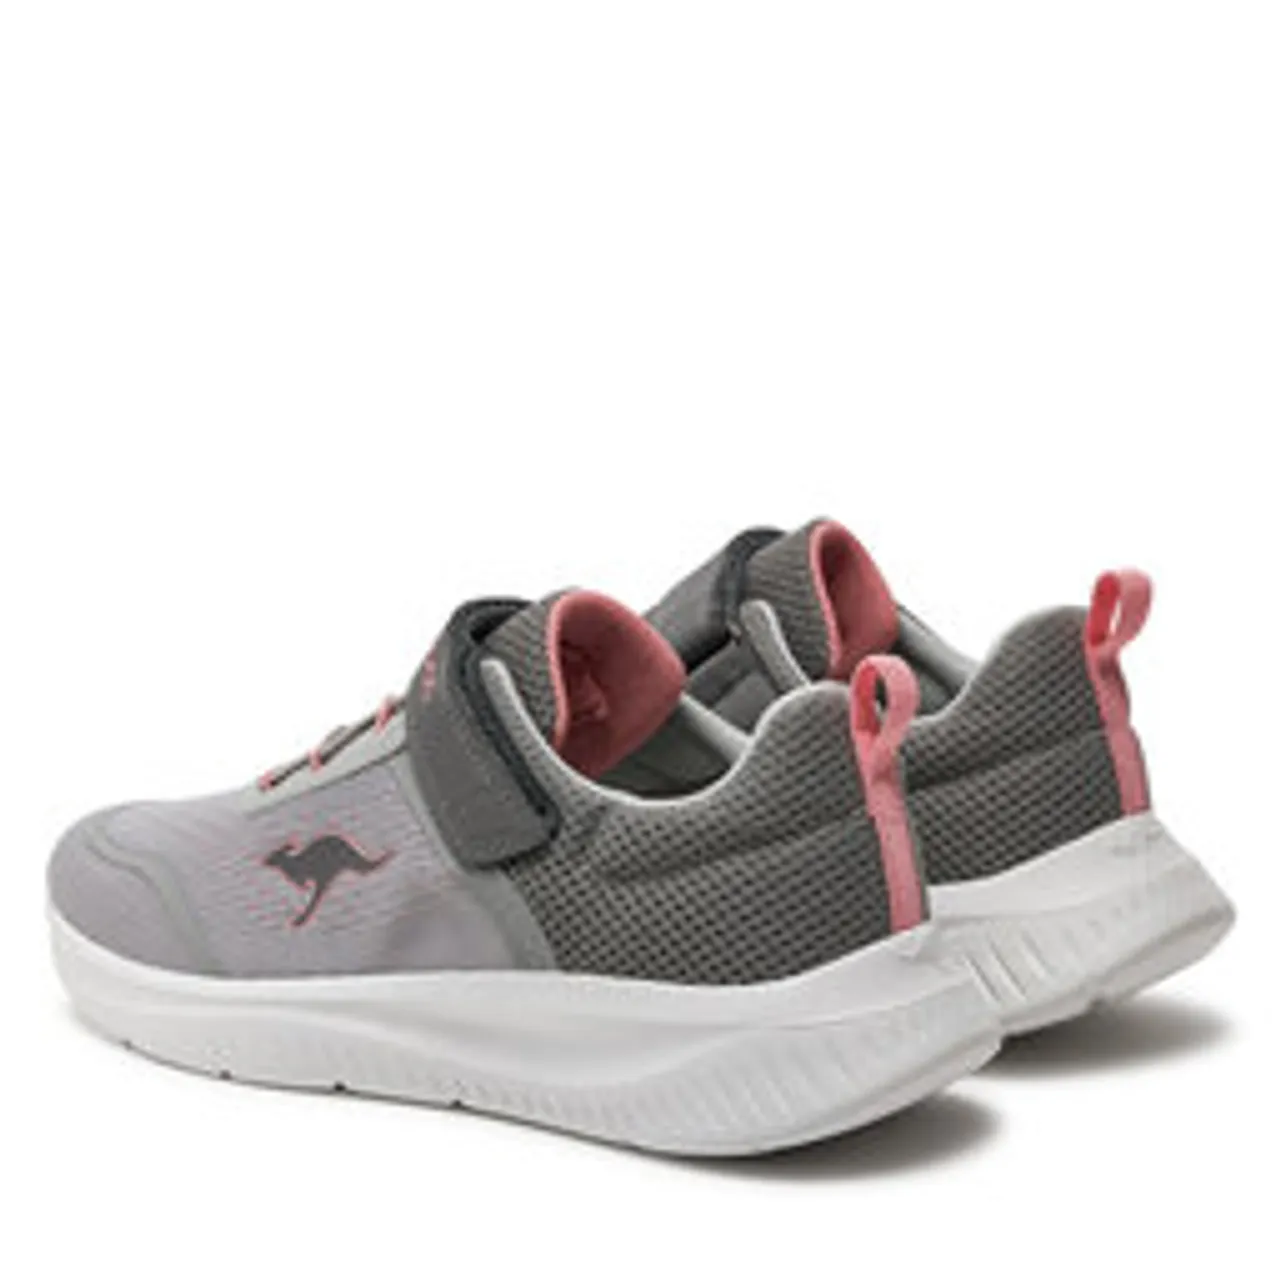 Sneakers KangaRoos K-Ft Tech Ev 18916 2075 S Vapor Grey/Dusty Rose